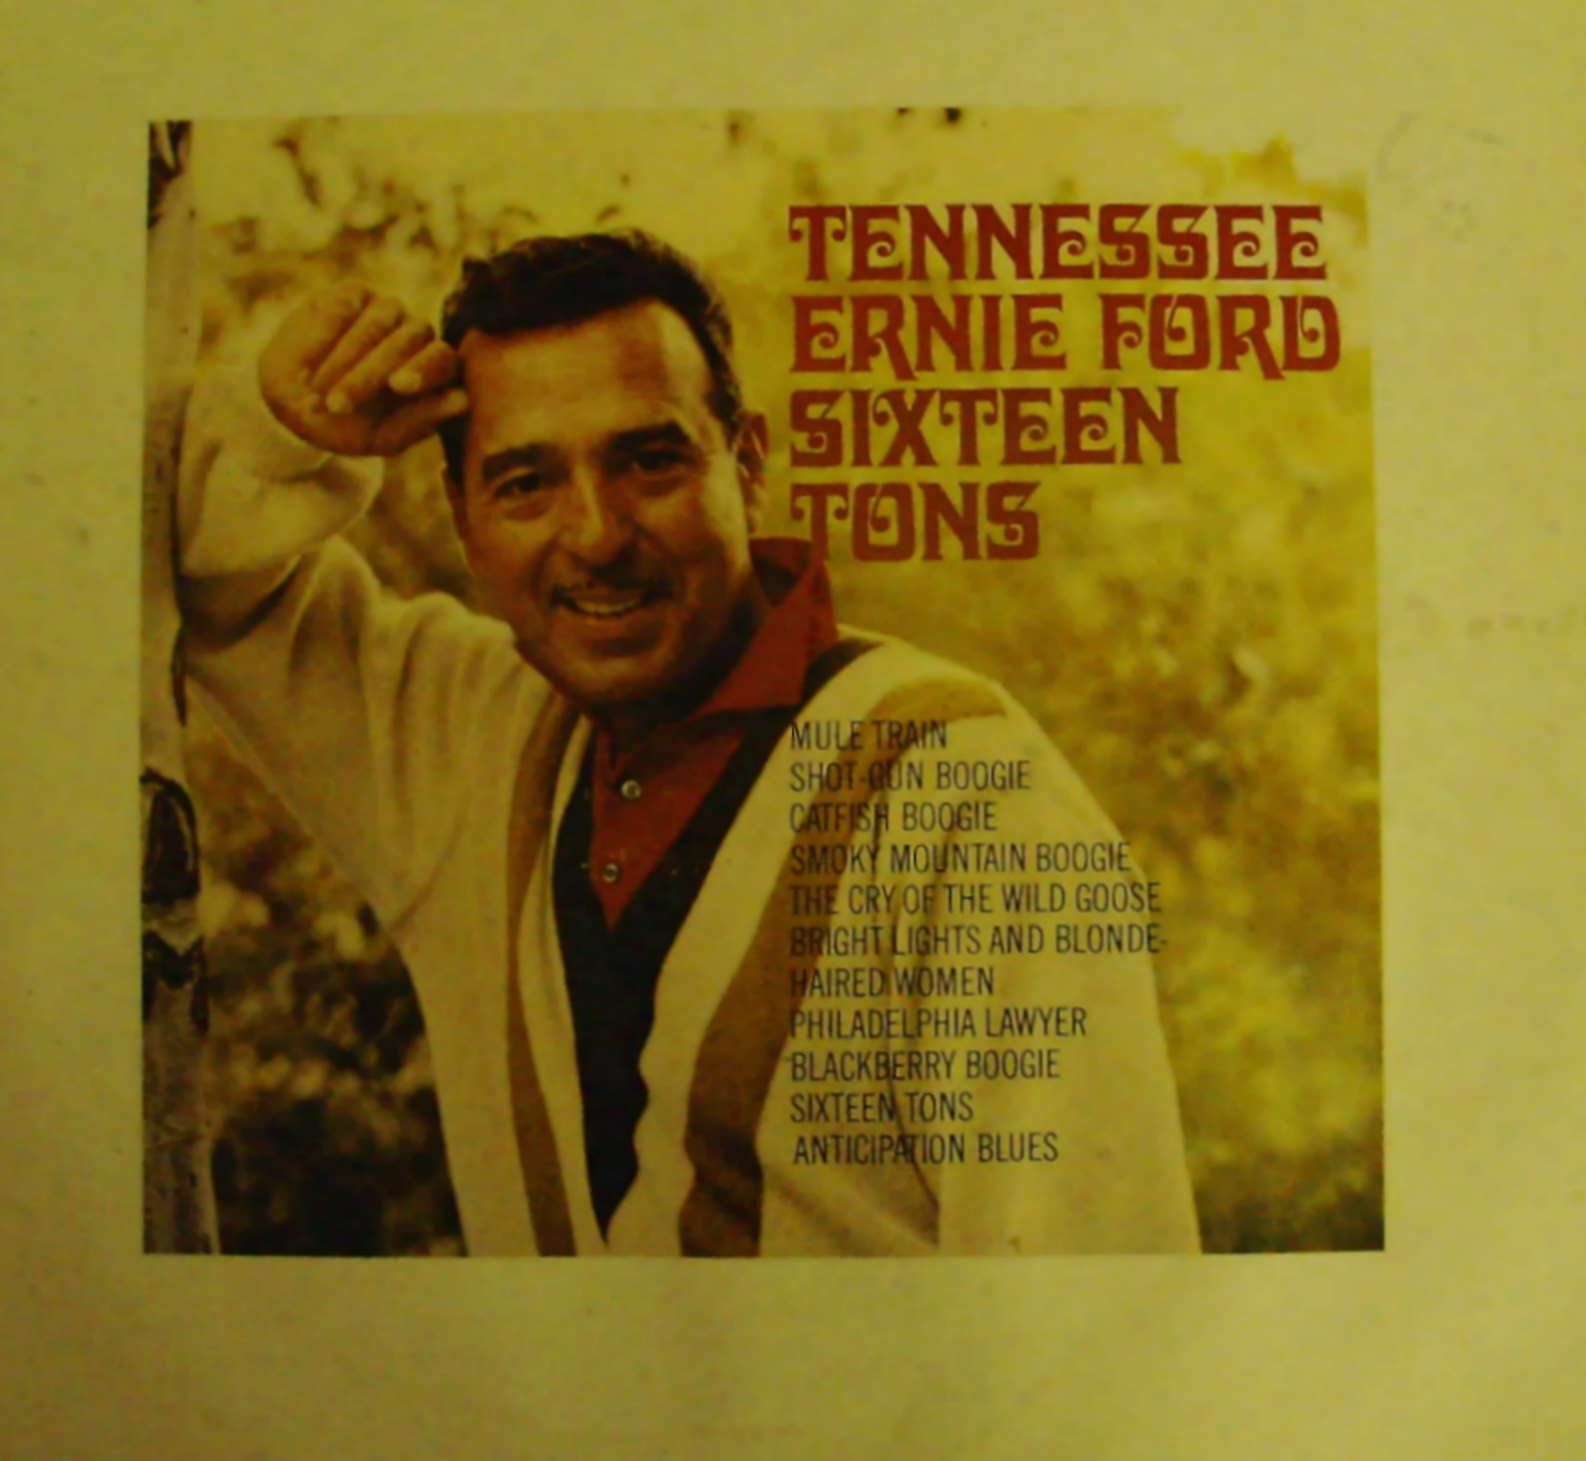 Tennessee ernier ford song lyrics sixteen tons #2